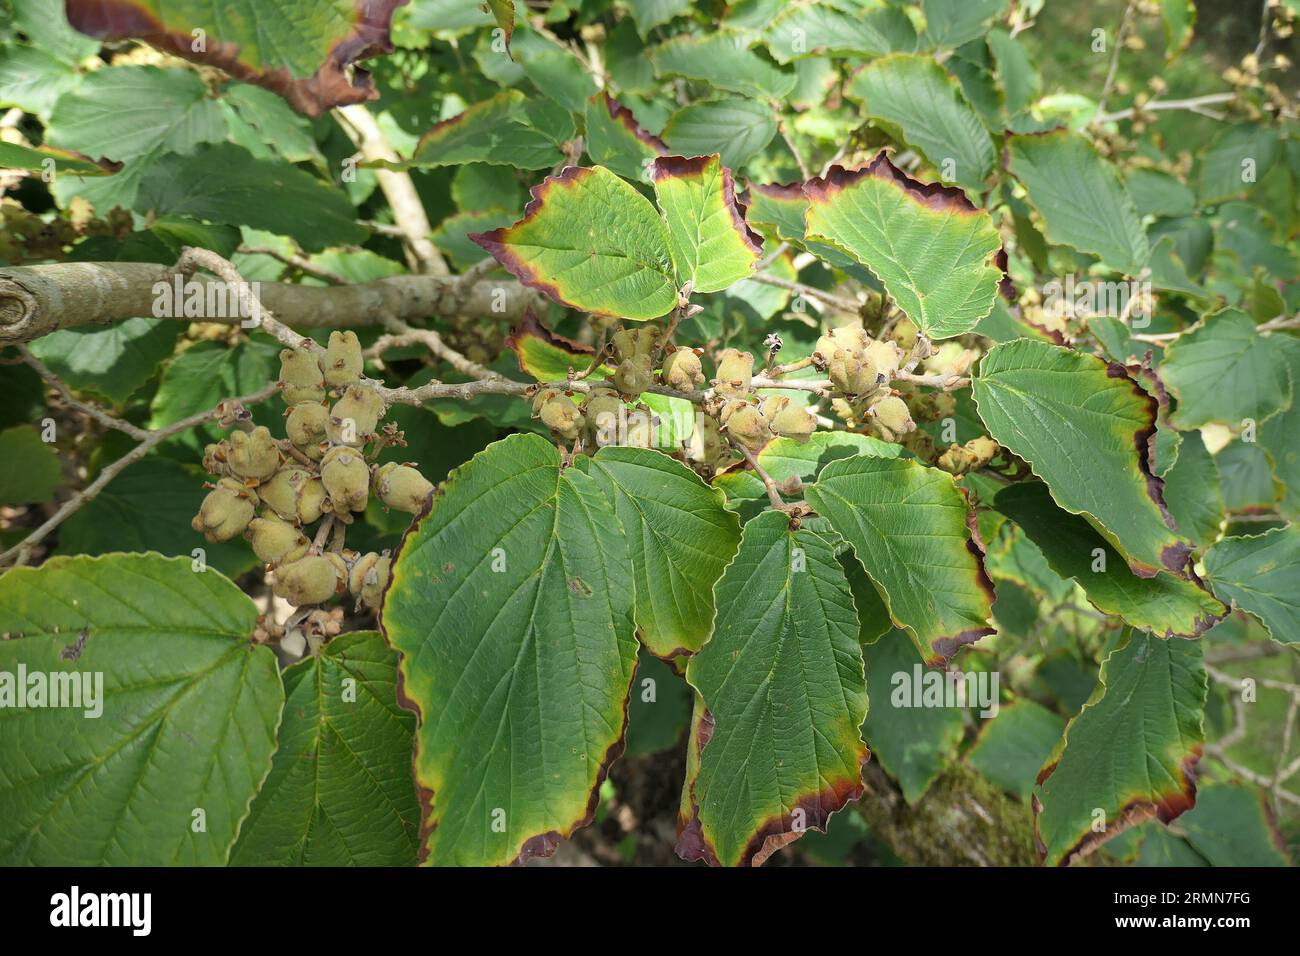 Closeup of the summer fruits and green leaves of the perennial garden shrub hamamelis intermedia pallida. Stock Photo